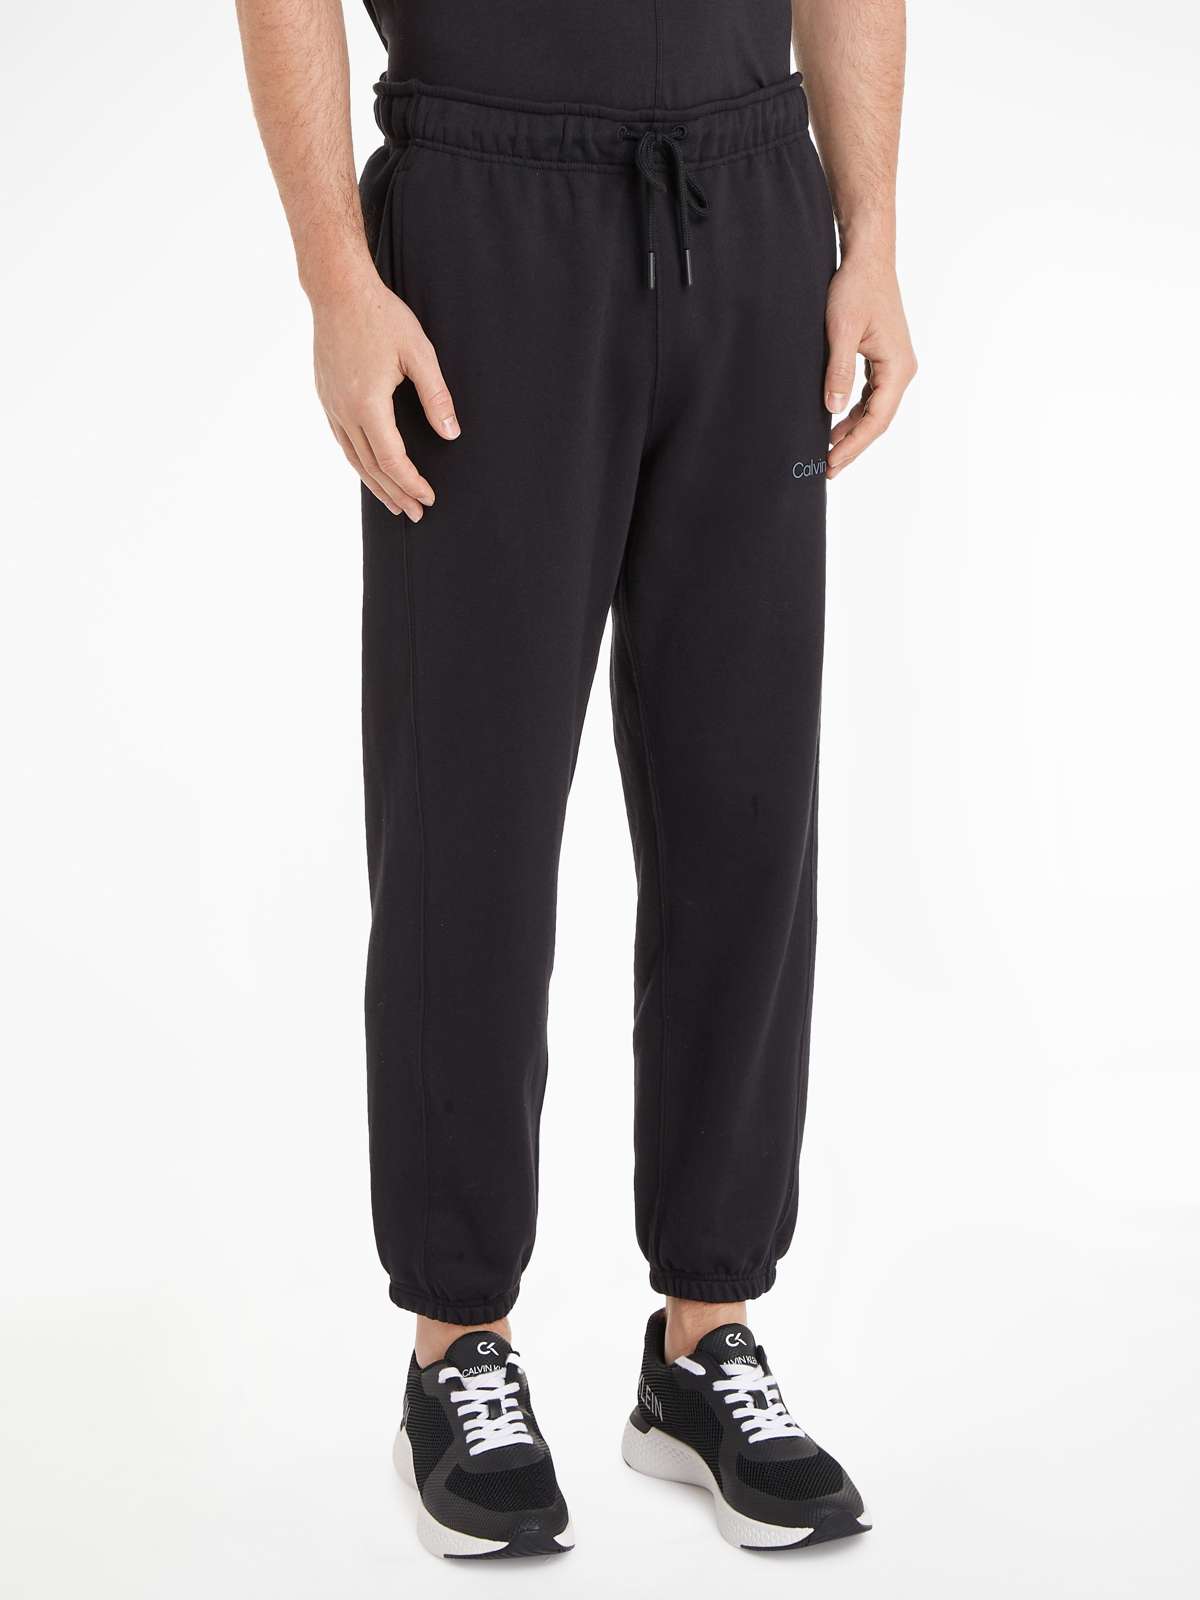 Спортивные брюки с логотипом Calvin Klein спереди.